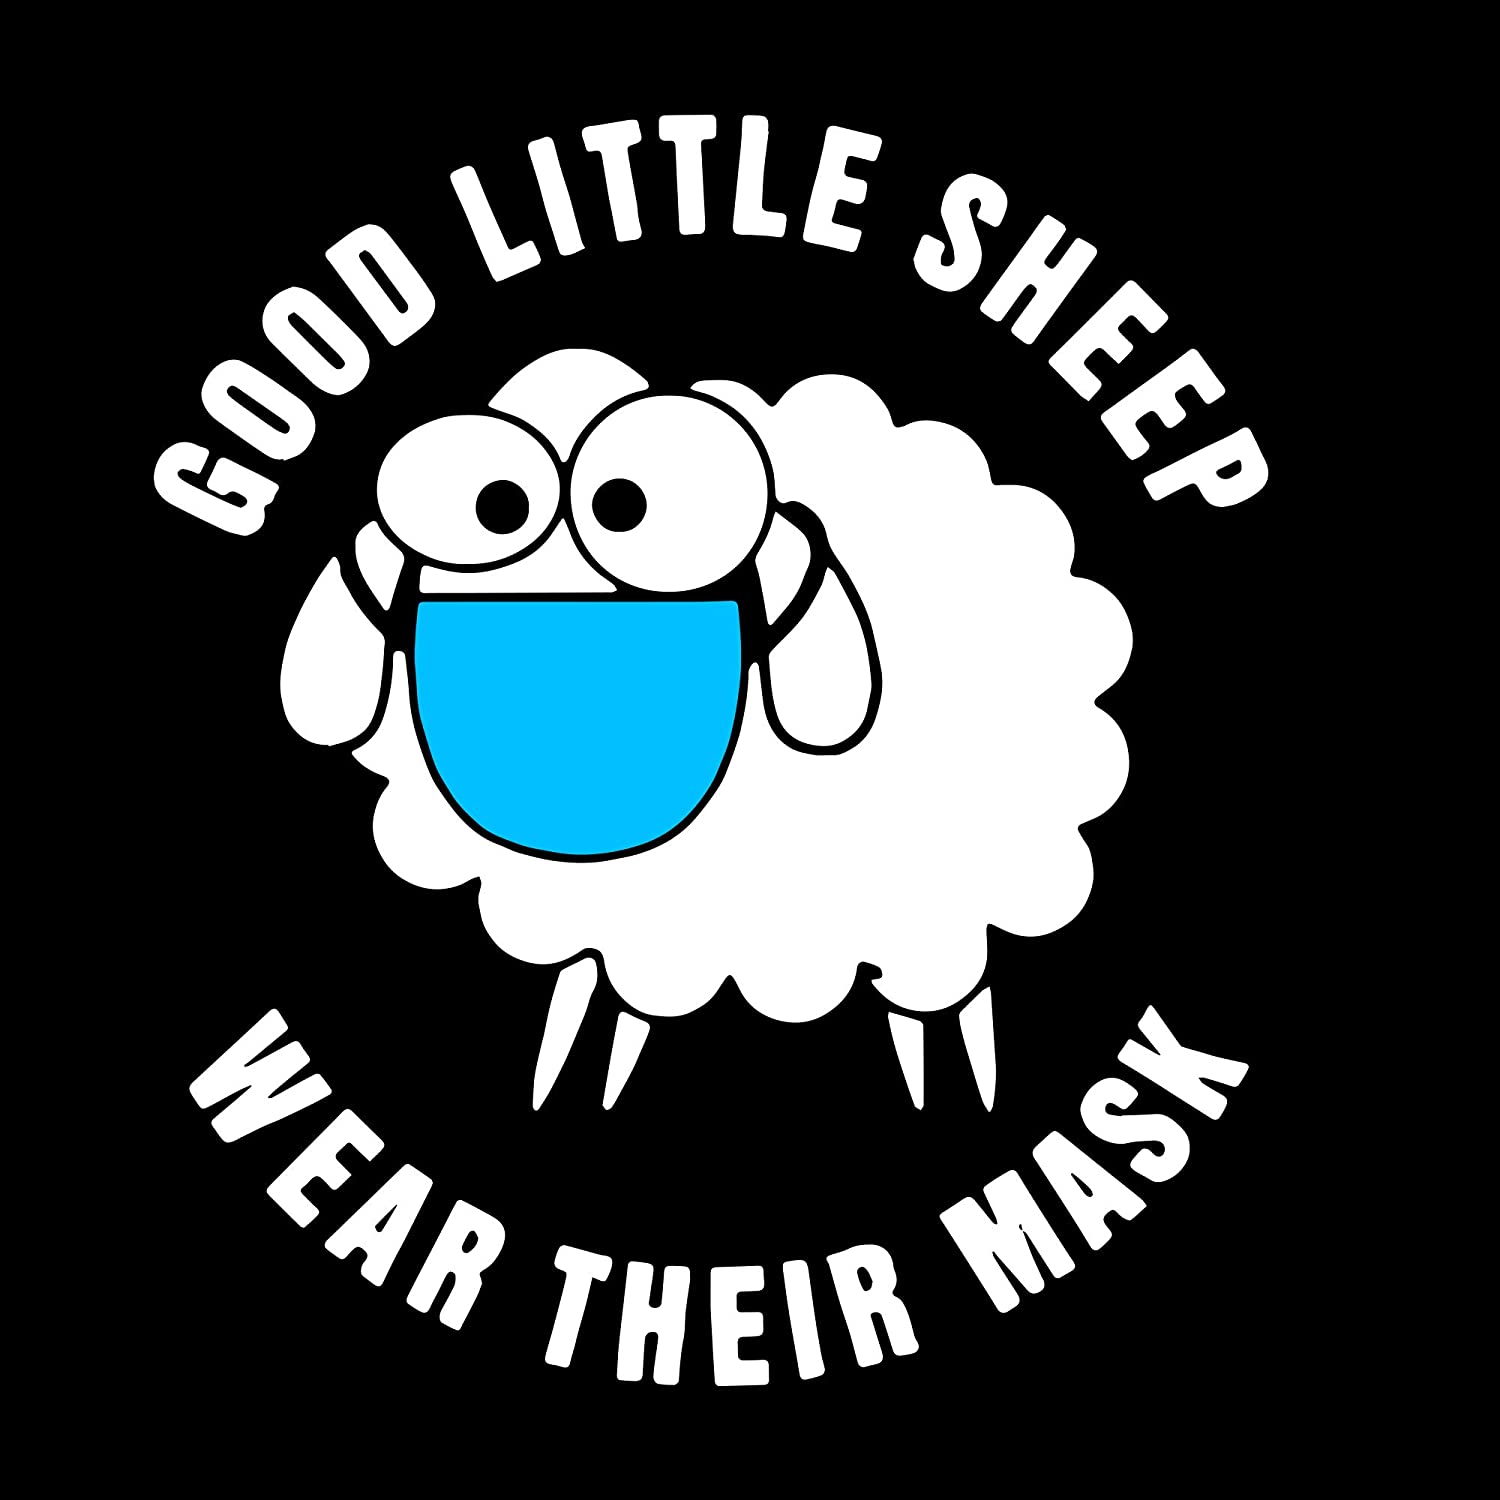 Amazon.com: Good Little Sheep Wear Their Mask Decal diecut 6" x 4.5" Coronavirus Covid-19 Covid19: Handmade